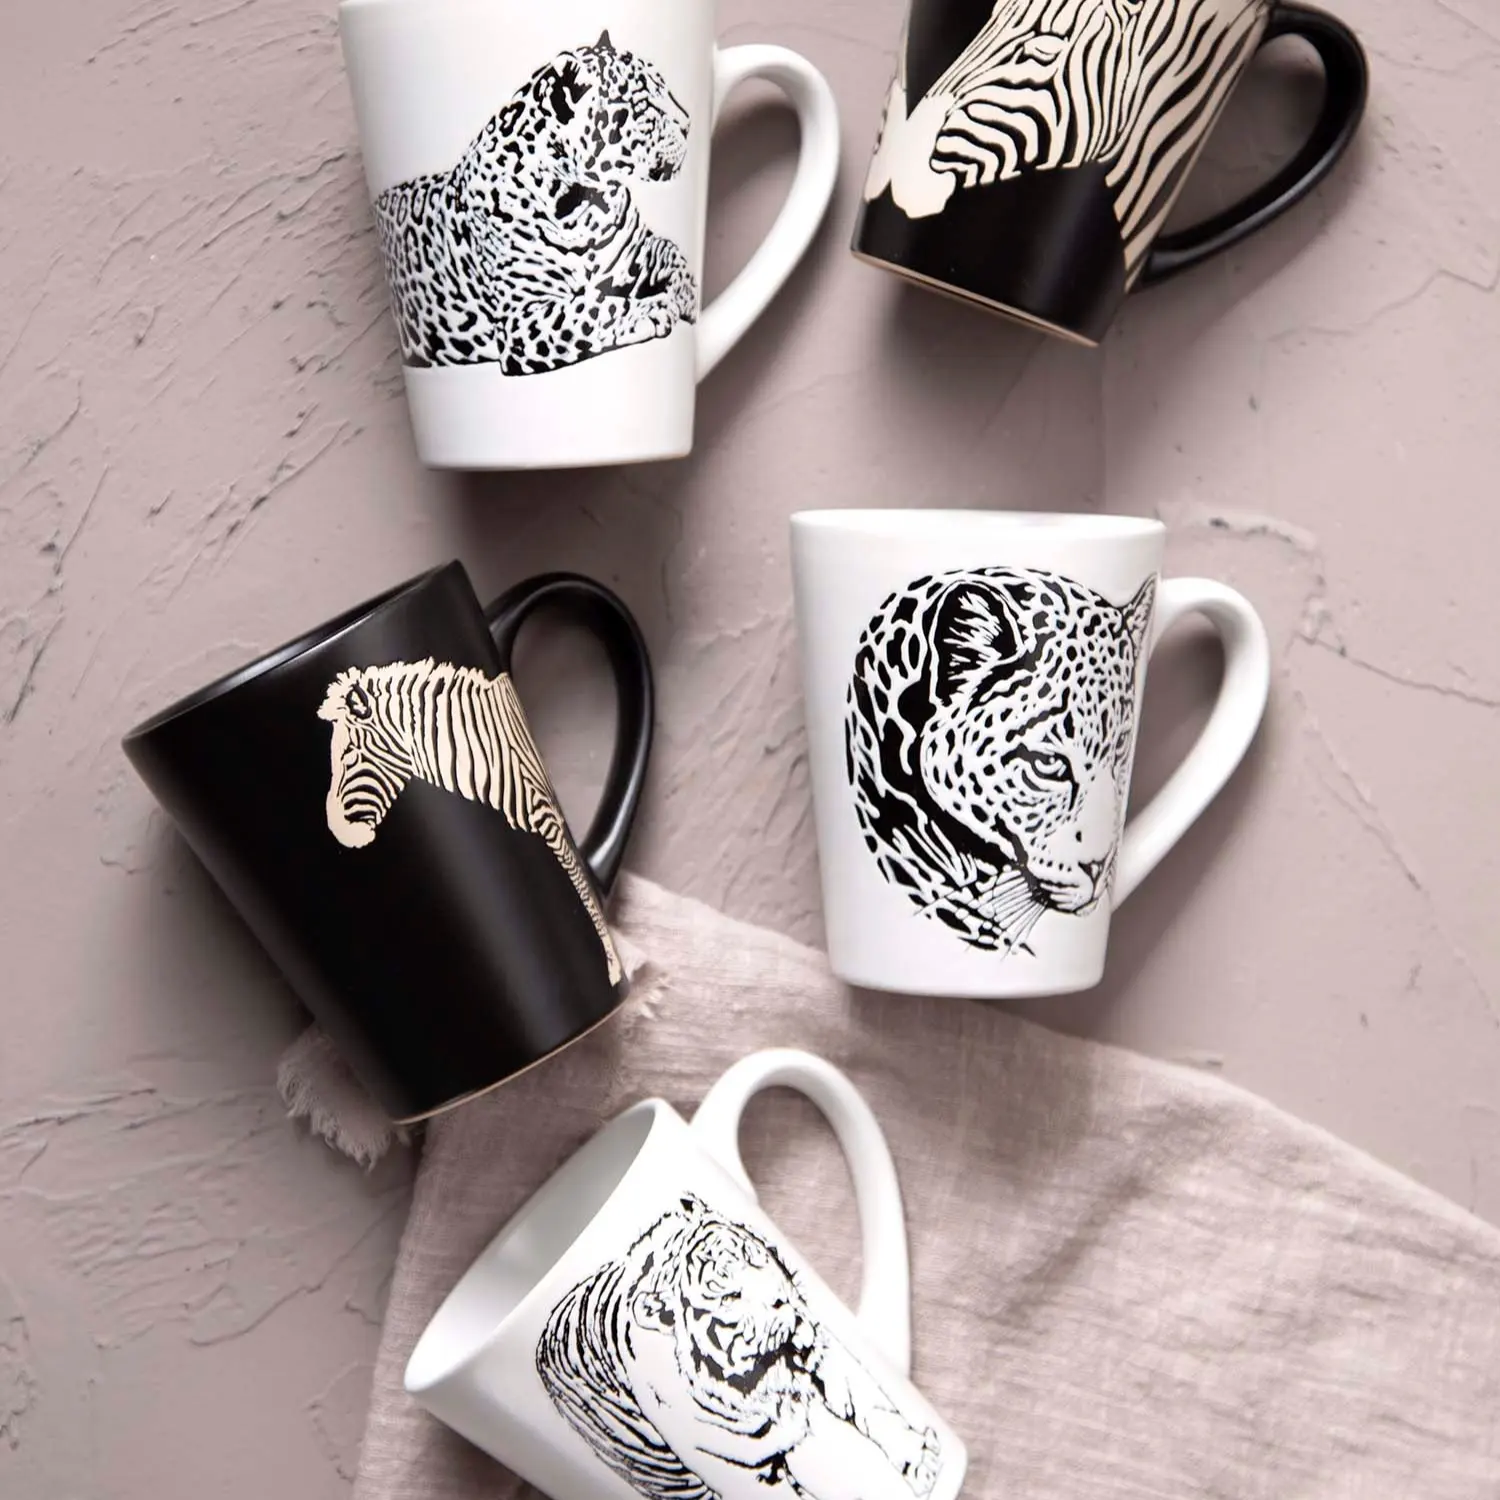 Tazza da caffè classica in ceramica nera con supporto per tigre serie Zebra africana classica